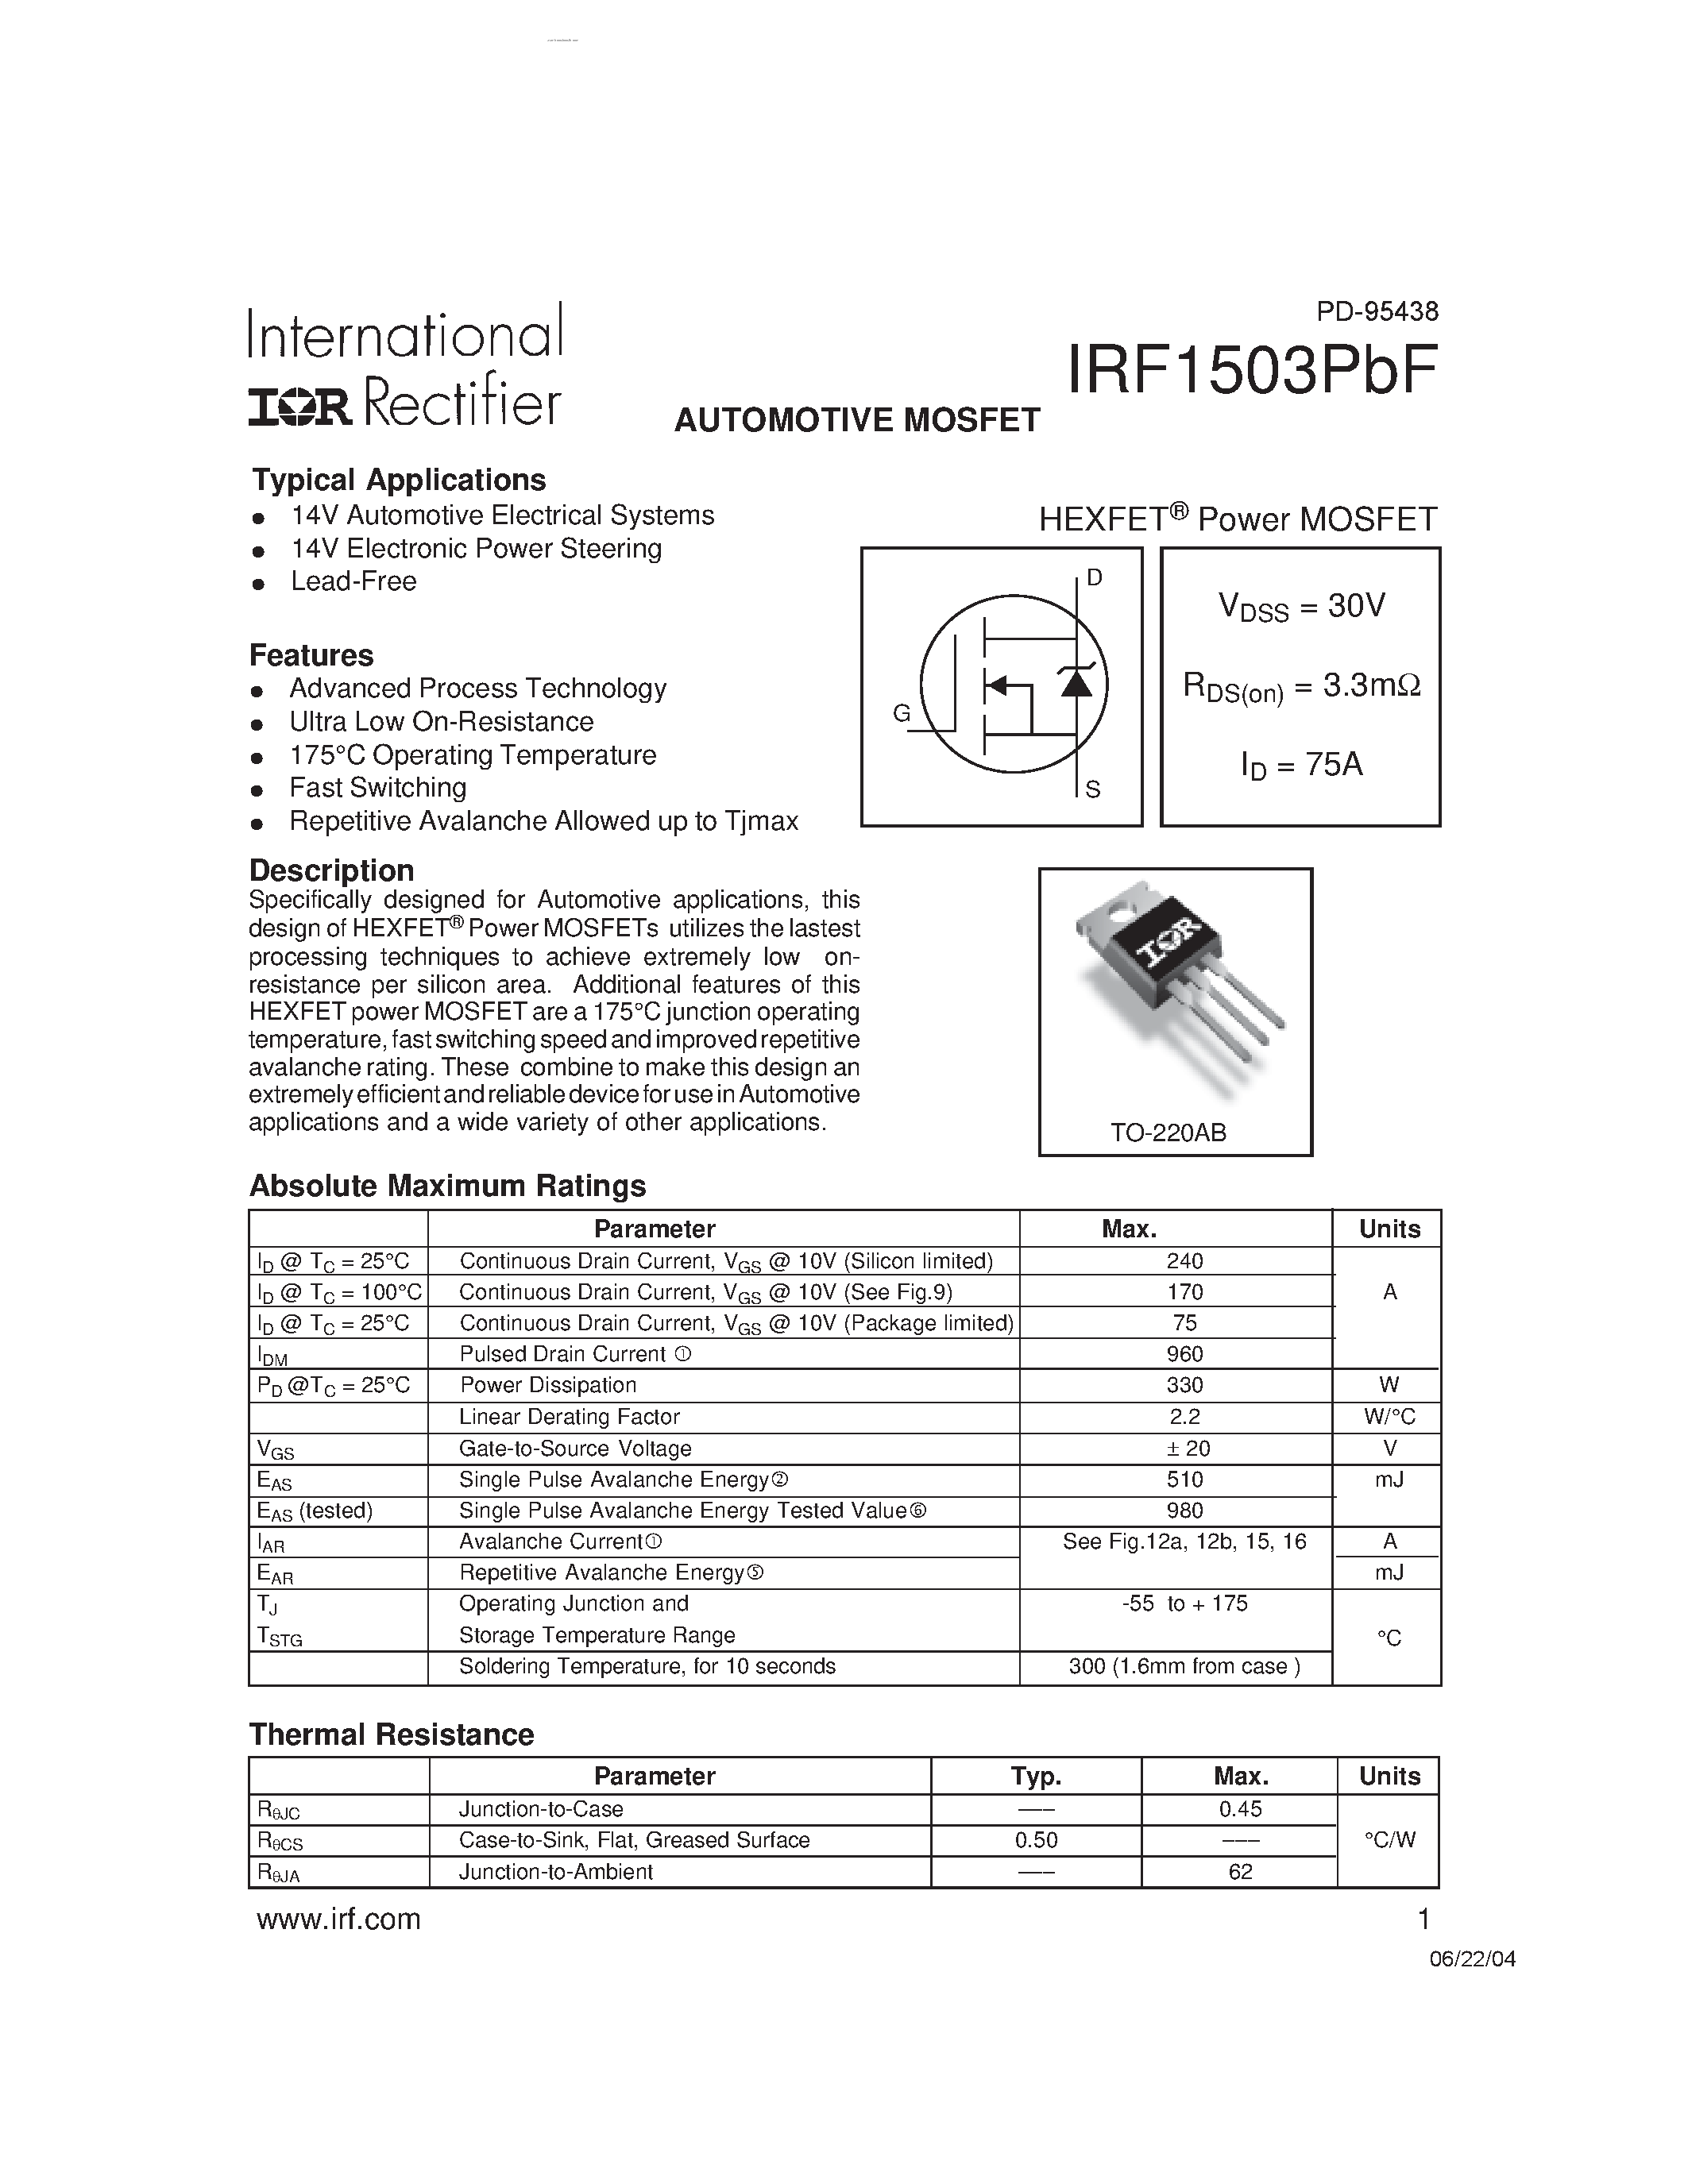 Datasheet IRF1503PBF - AUTOMOTIVE MOSFET page 1